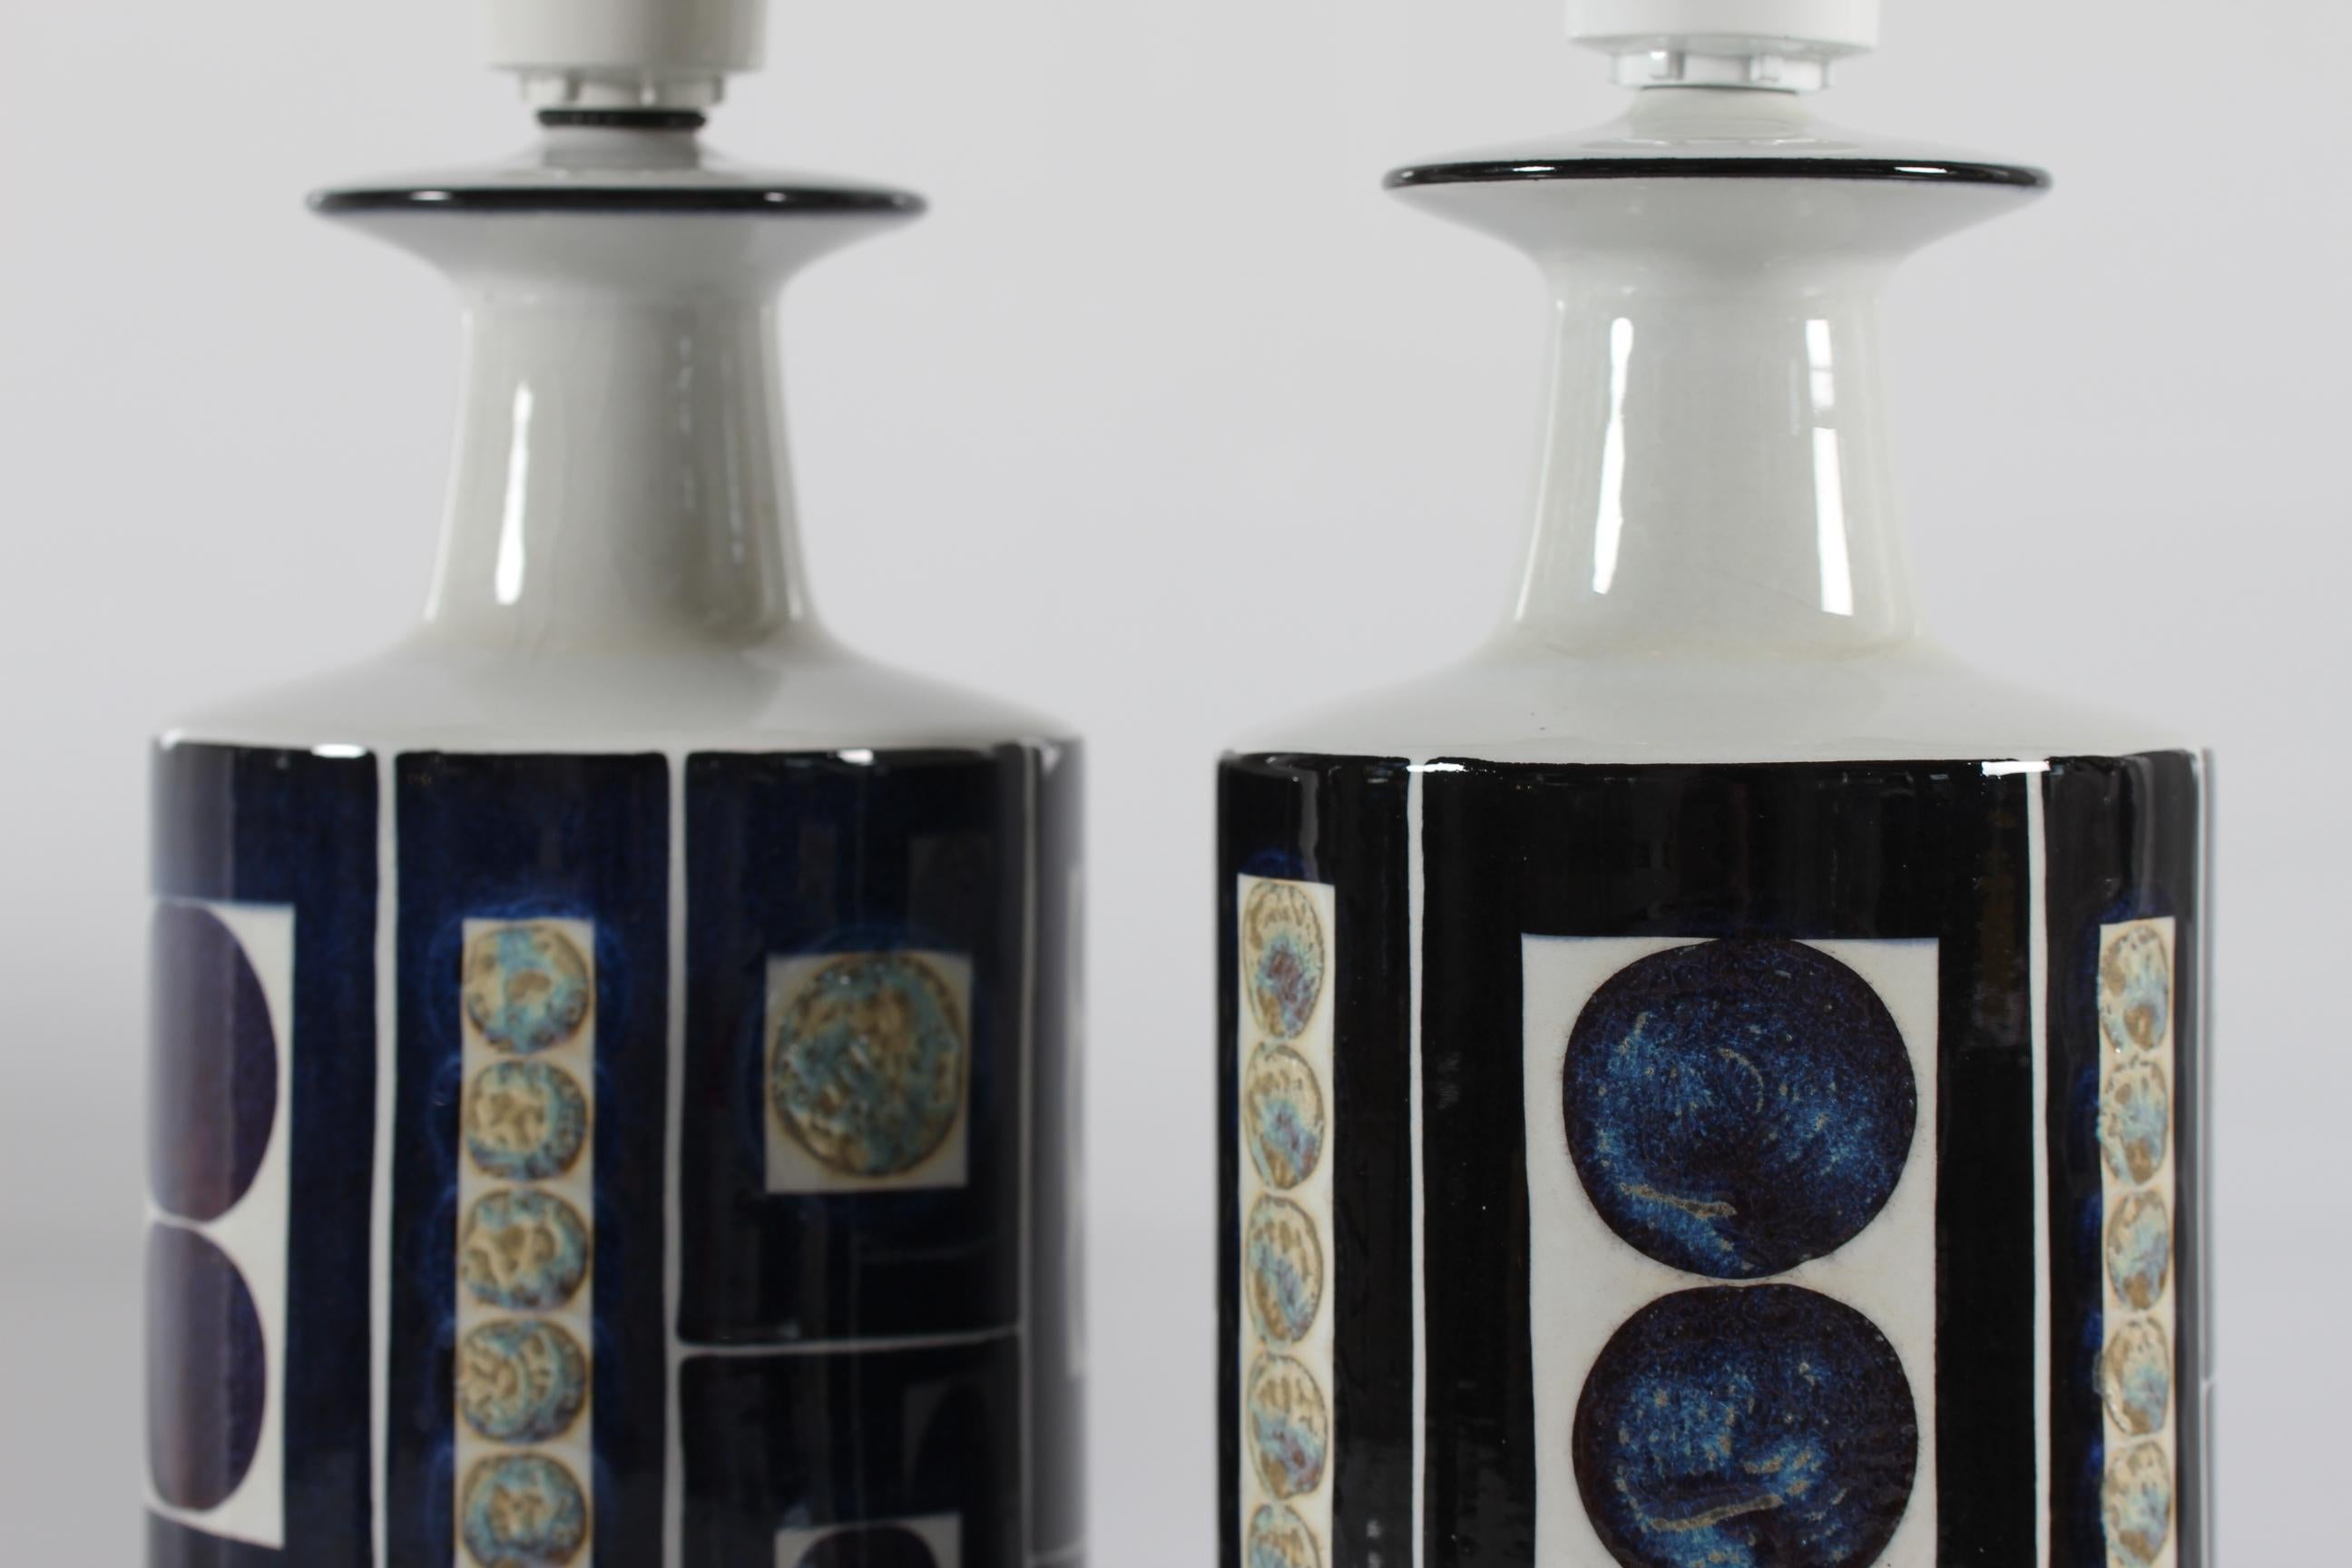 Pair of Royal Copenhagen Table Lamps by Inge-Lise Koefoed, Danish Ceramic, 1960s For Sale 6